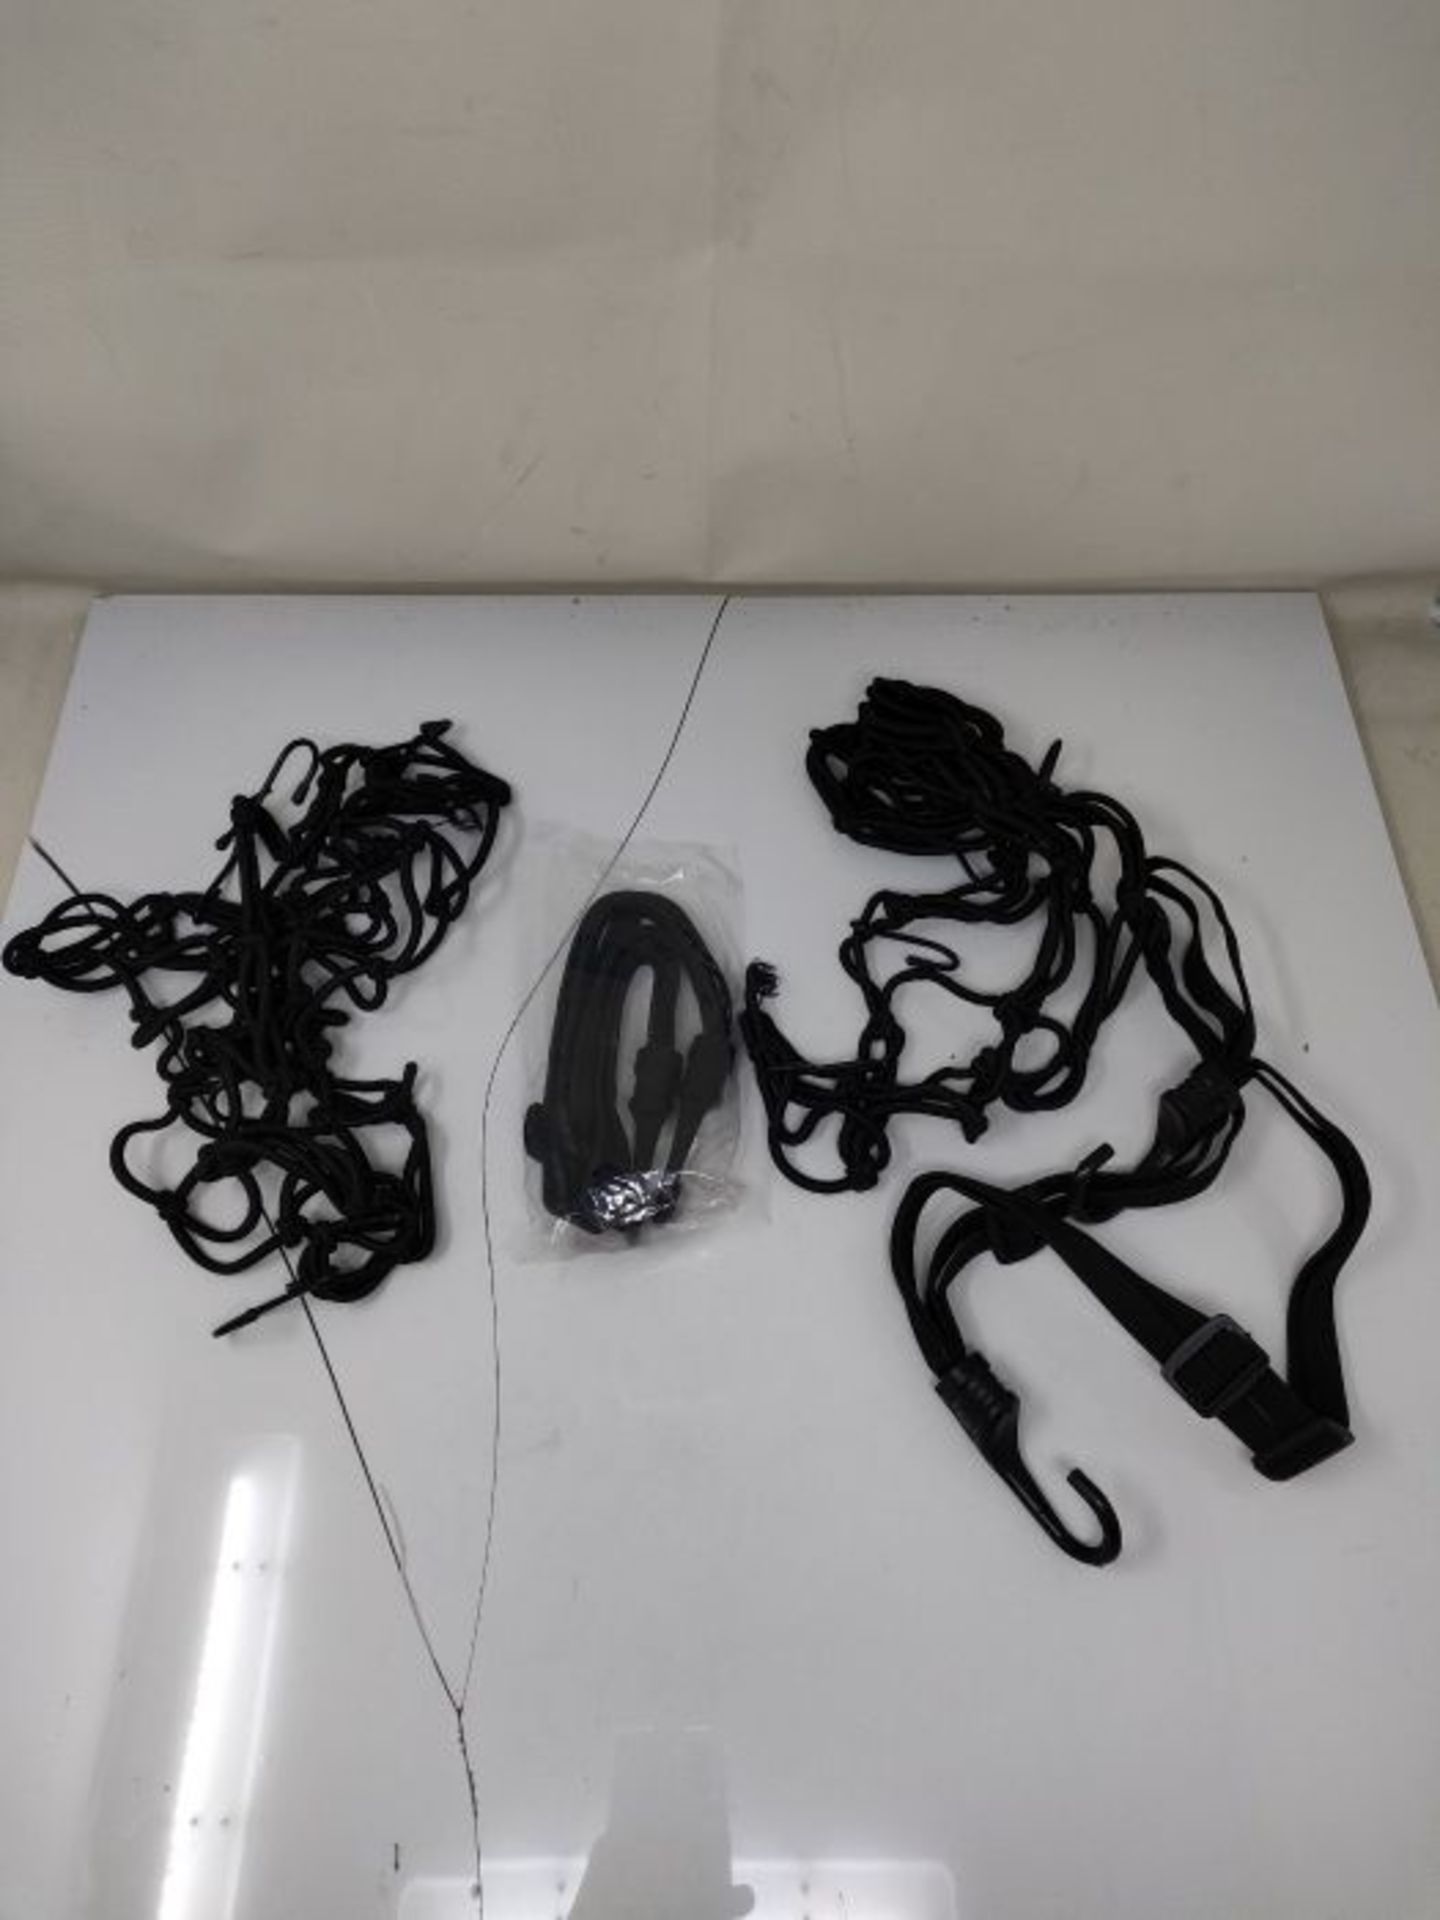 Pack of 2 motorcycle luggage net, bicycle net, helmet net with hook, tension net, safe - Image 2 of 2